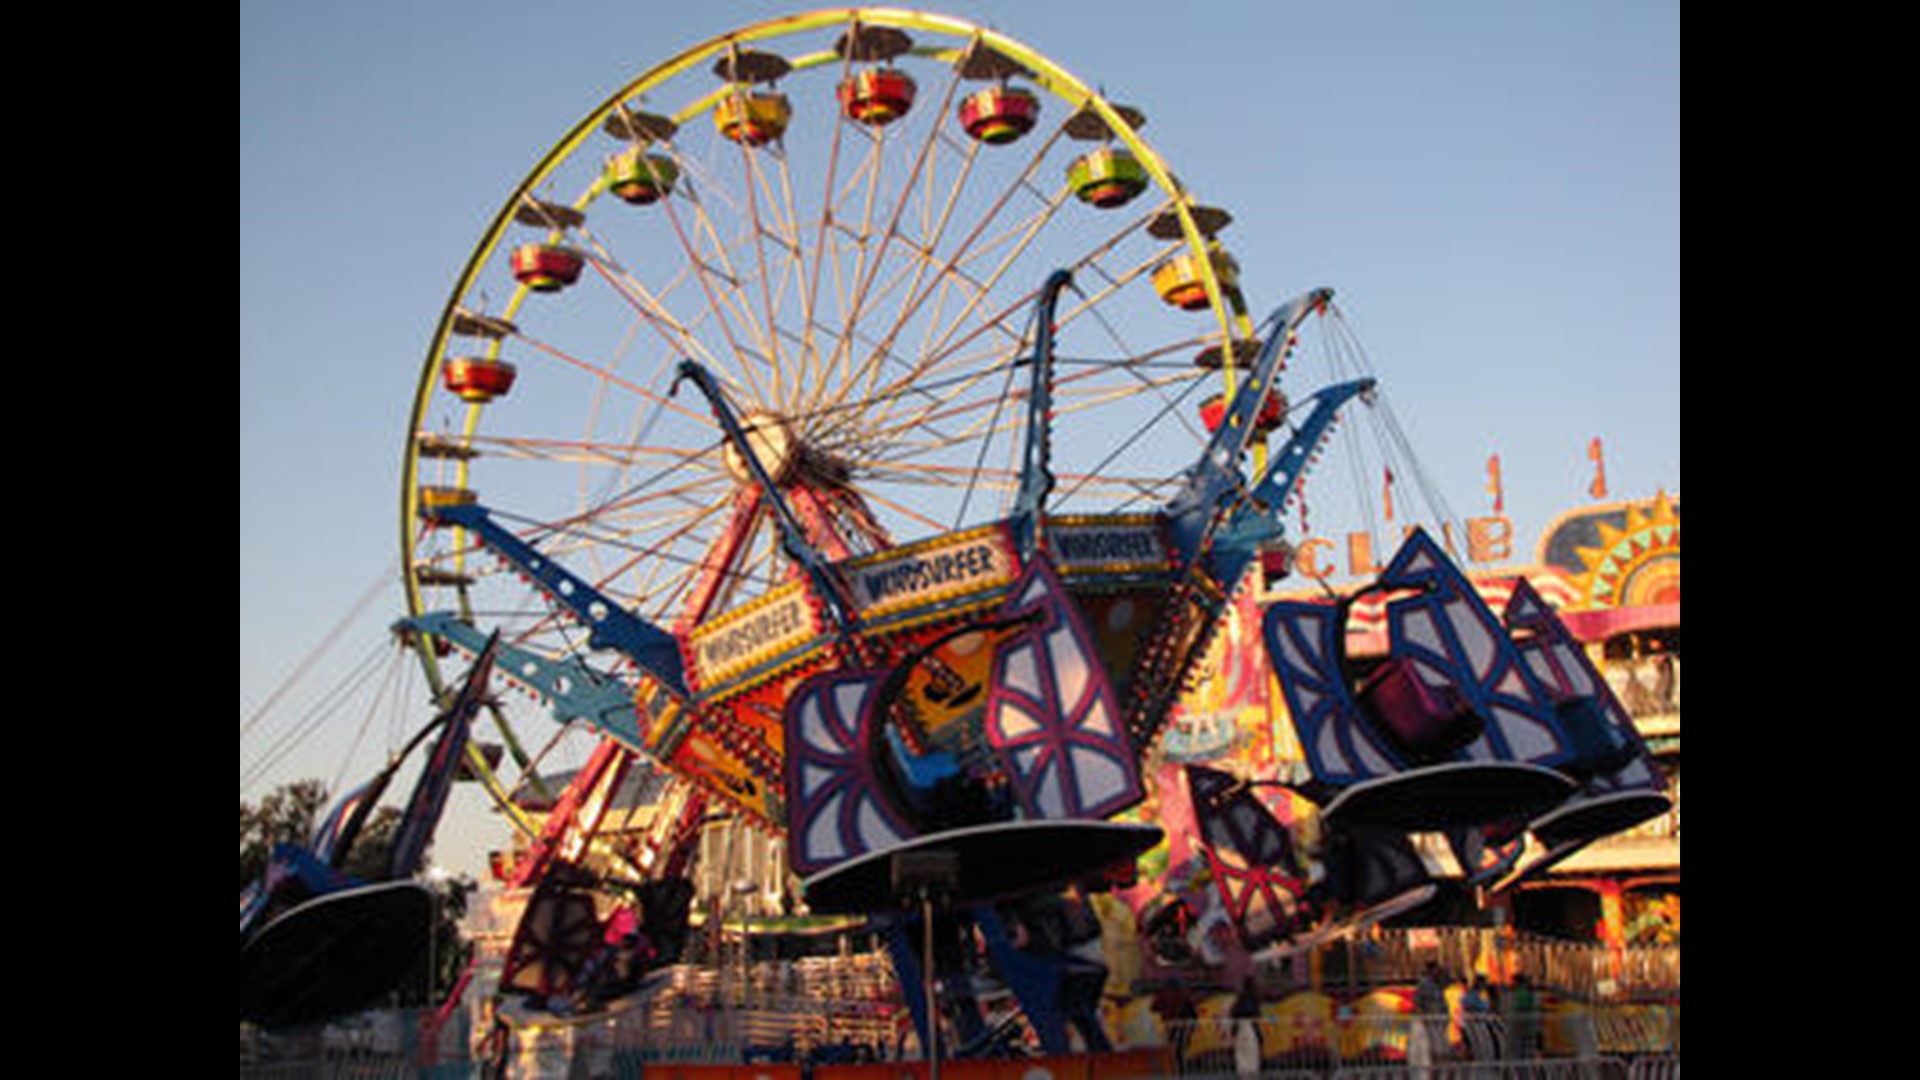 Check out the Maricopa County Fair!